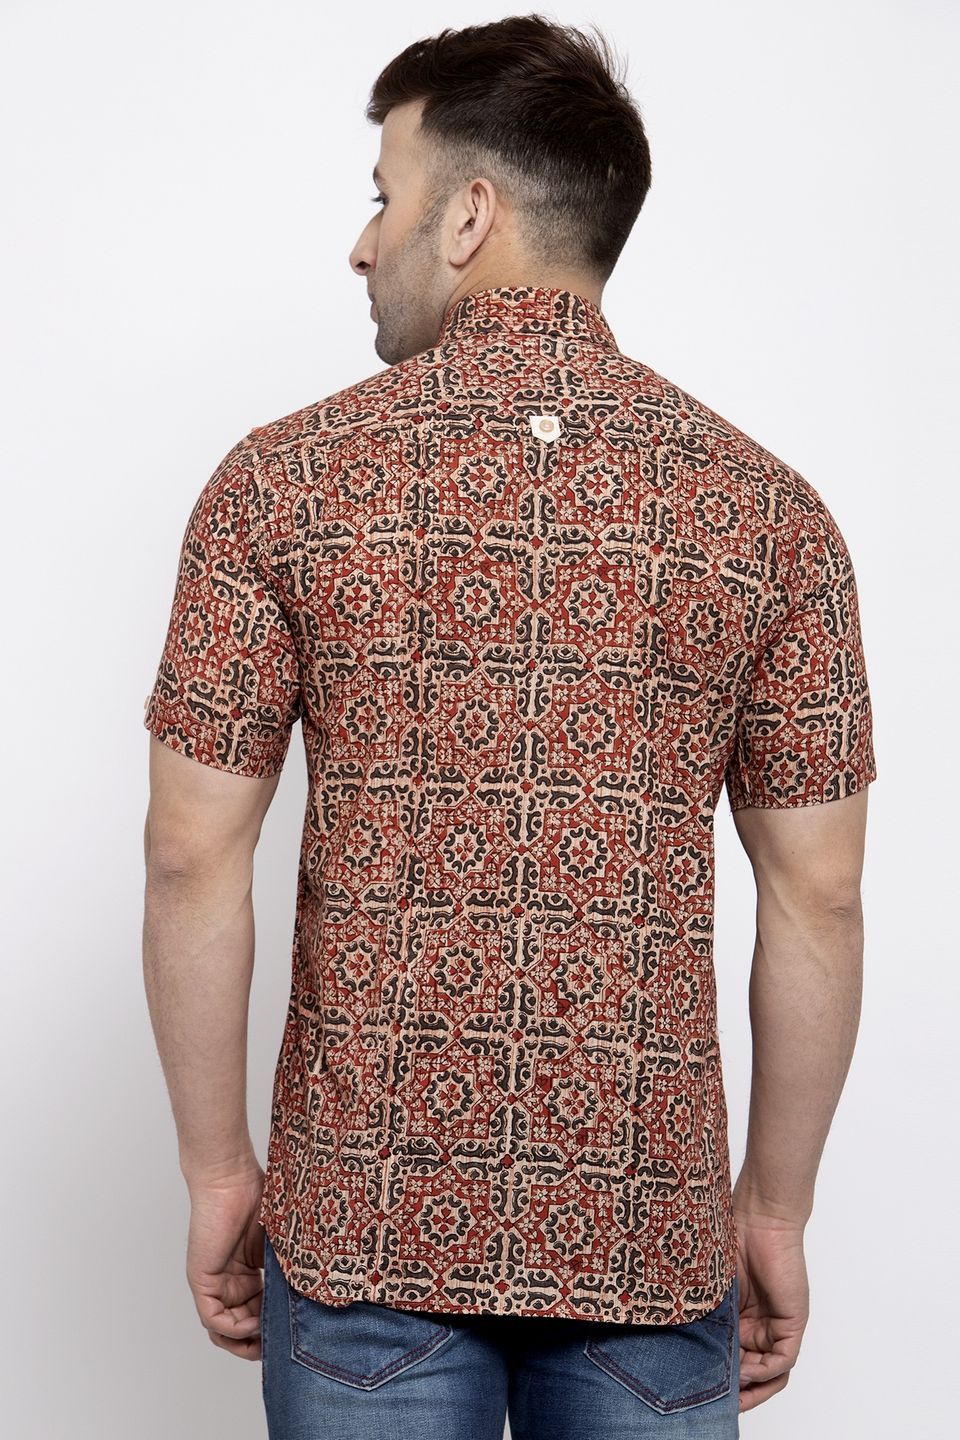 Wintage Men's Jaipur Cotton Tropical Hawaiian Batik Casual Shirt: Red